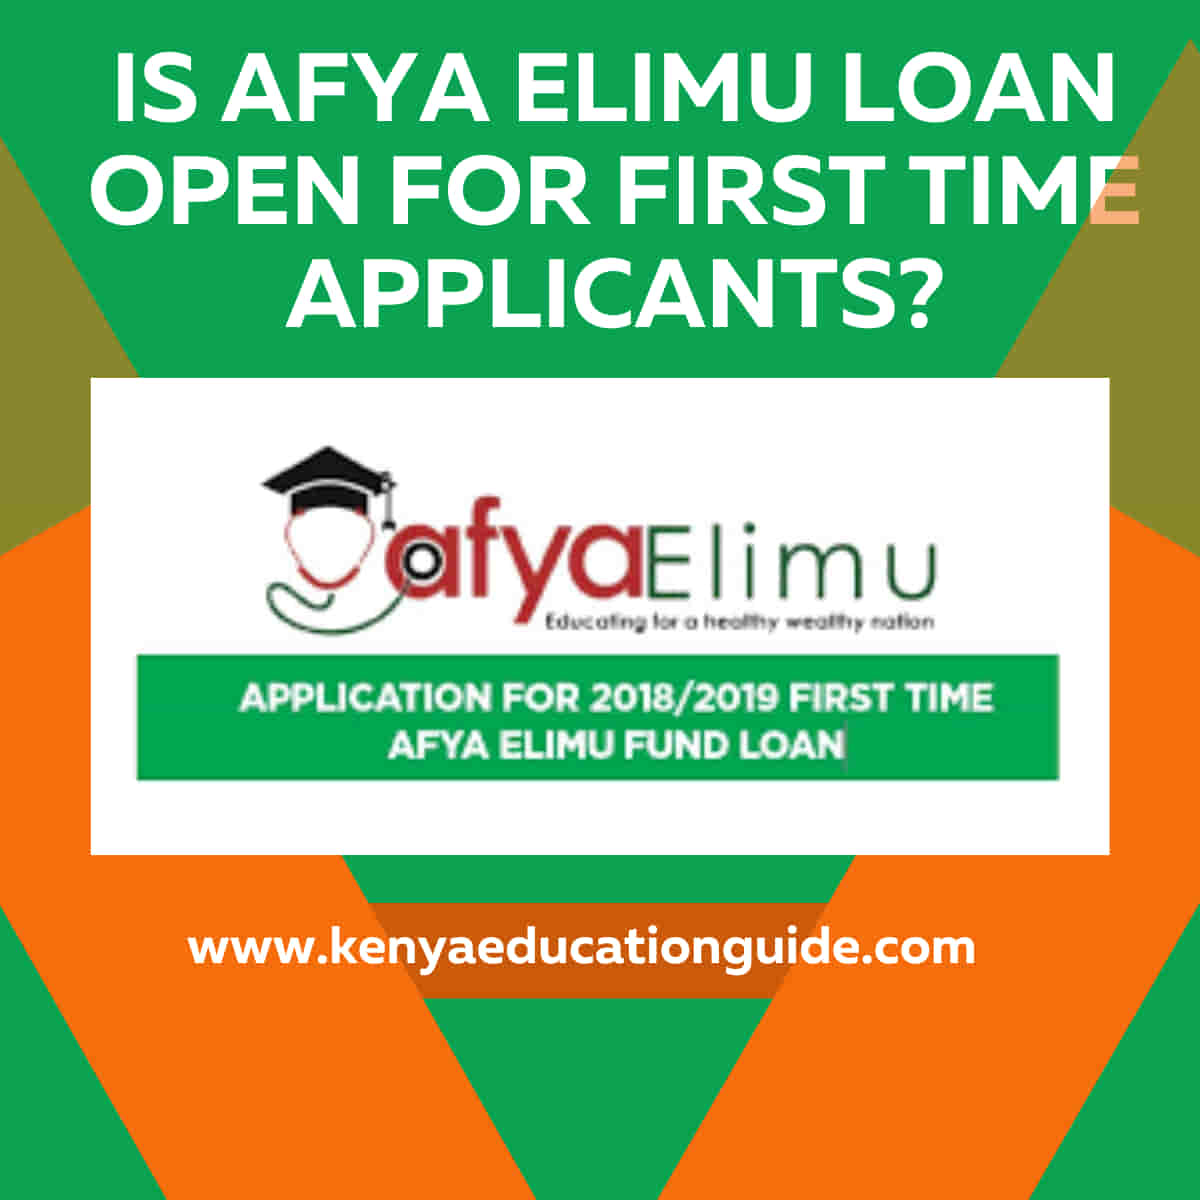 Is Afya Elimu loan open for first time applicants?